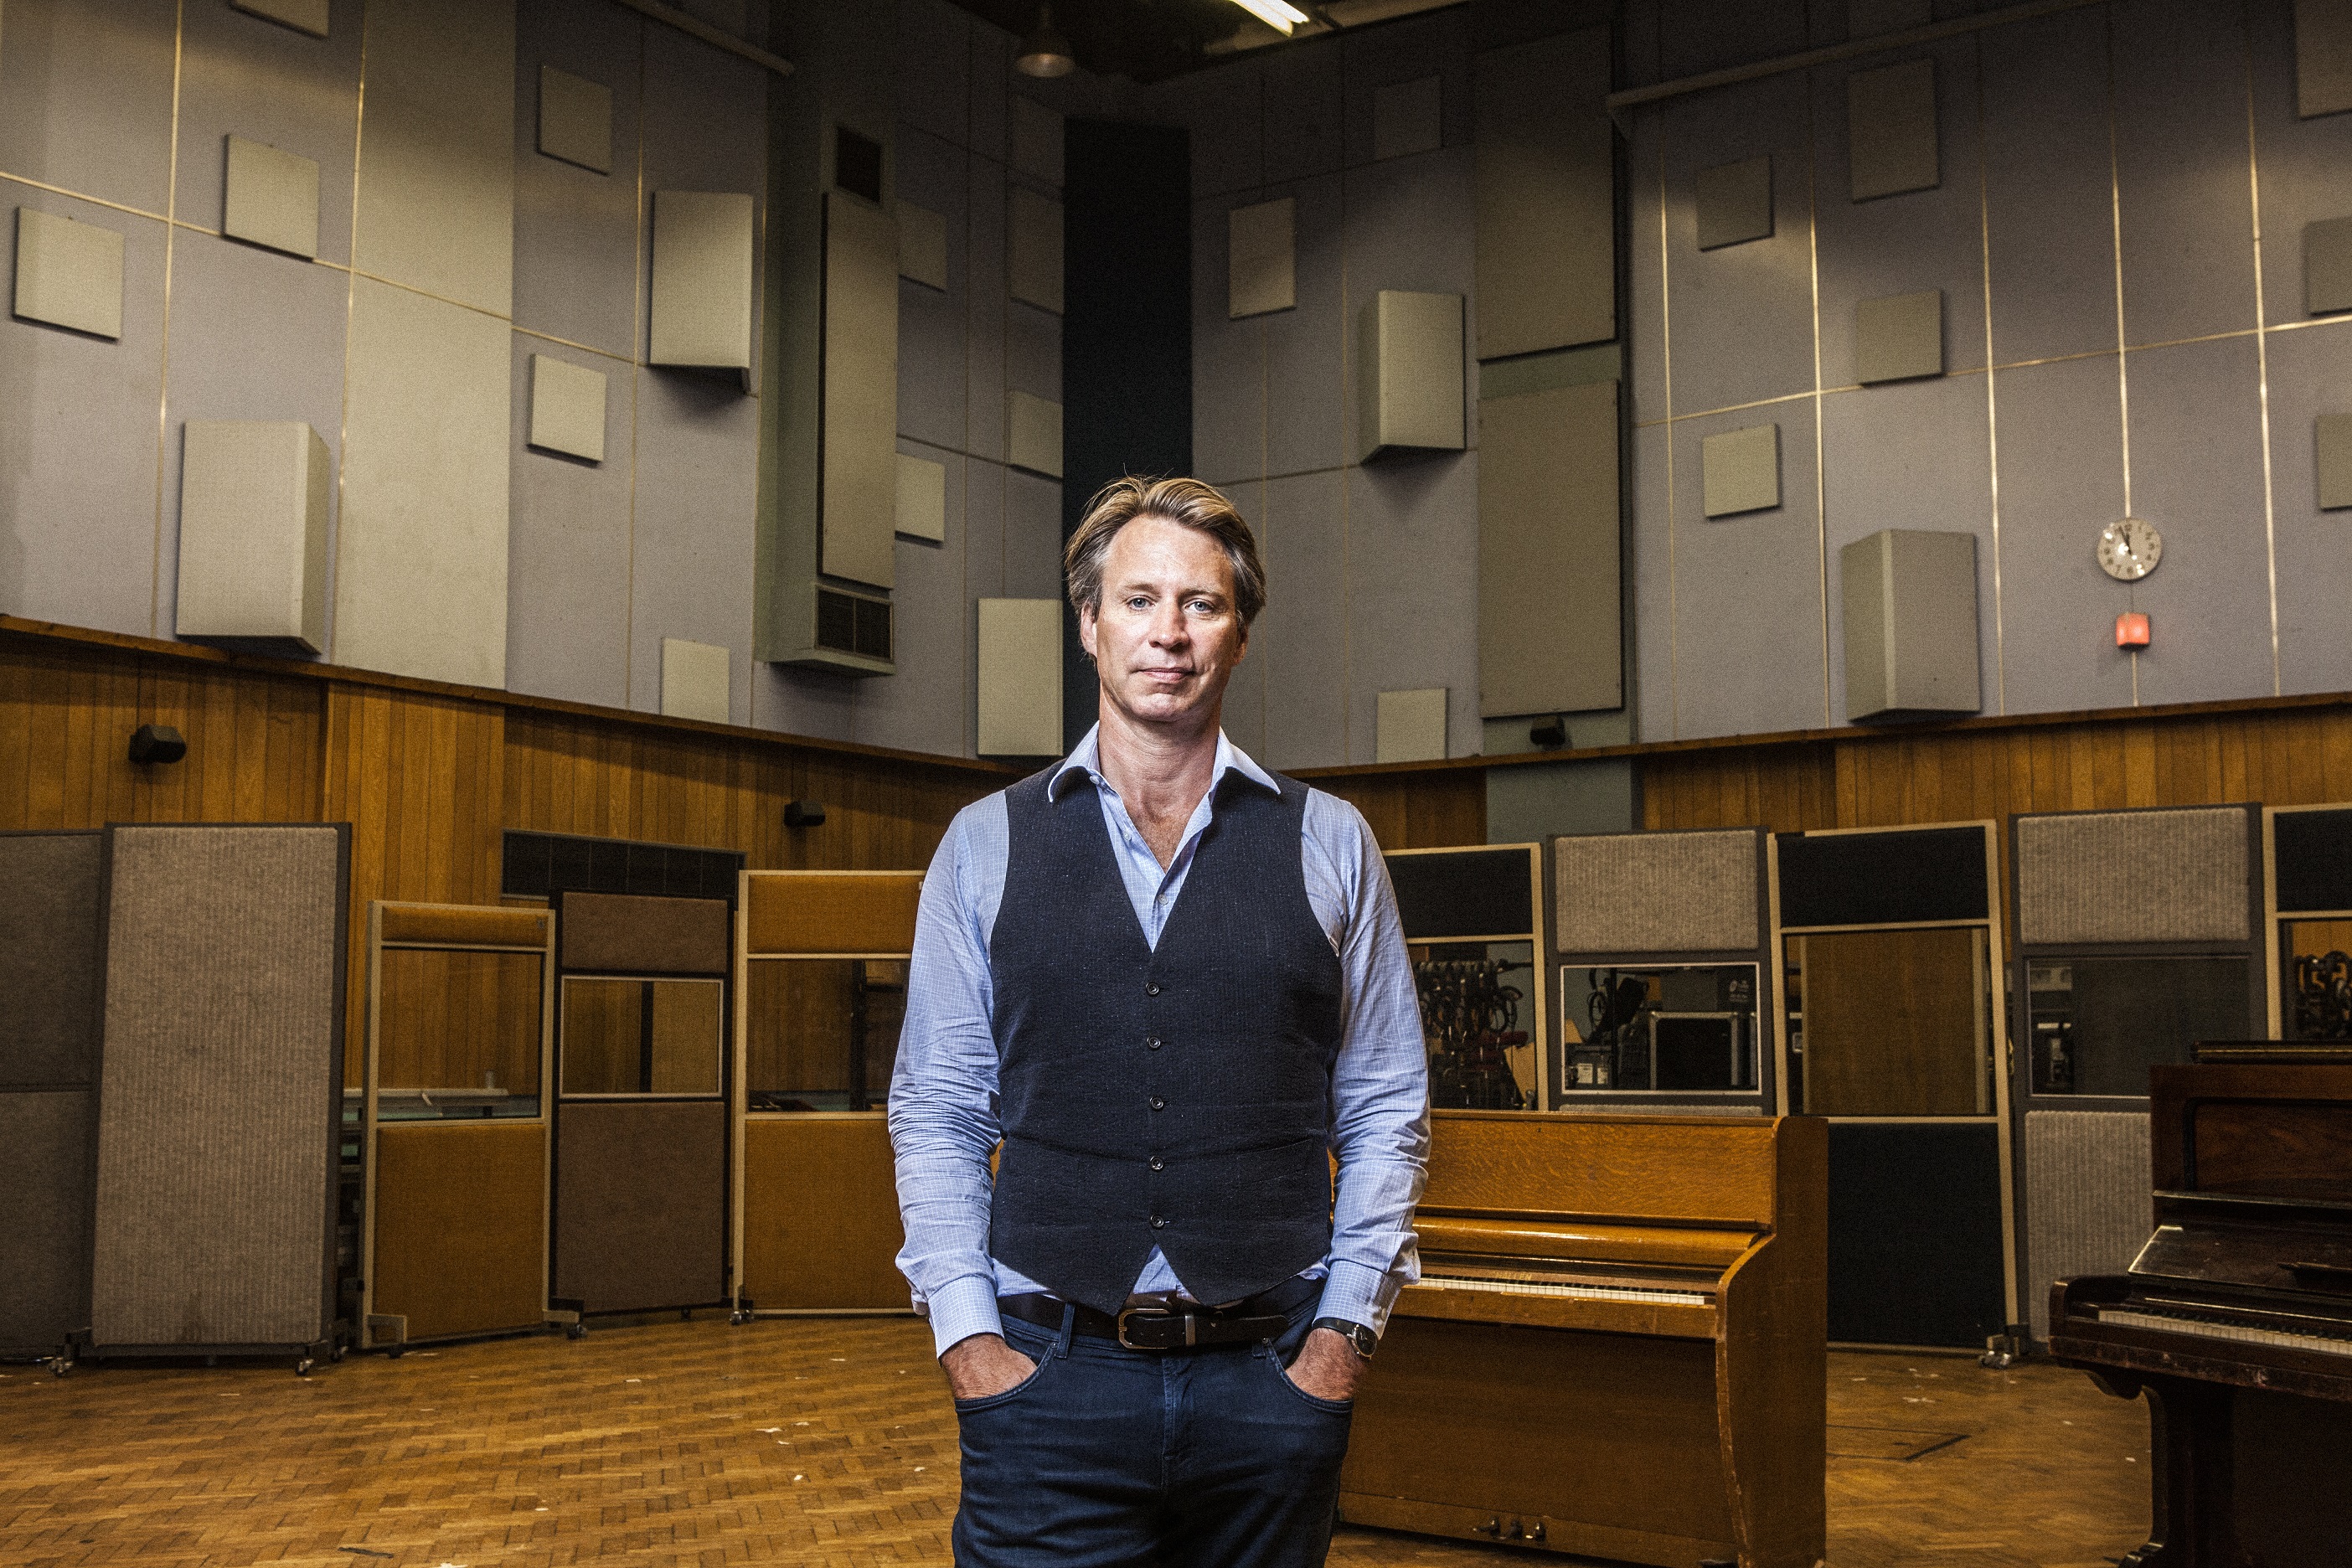 Grammy-winning producer Giles Martin lands top audio job at Universal Music Group